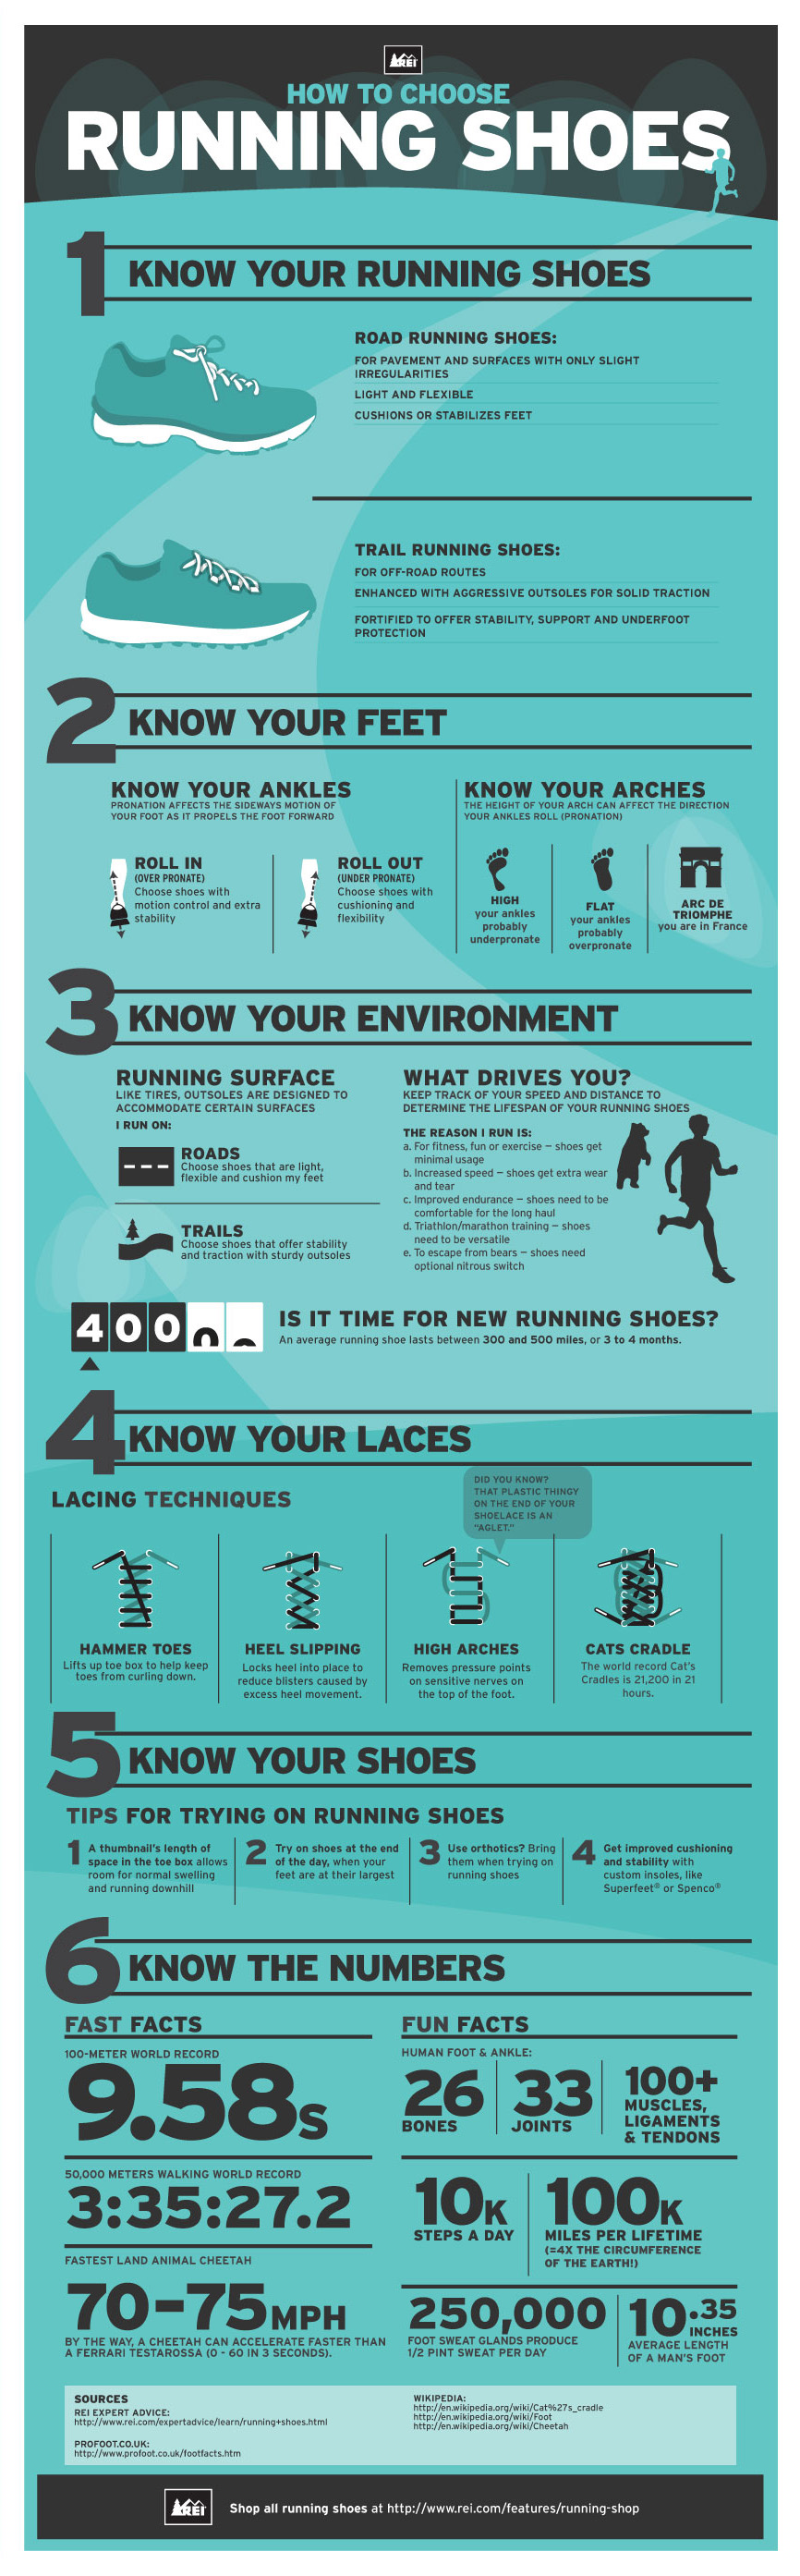 running-shoes-infographic.jpg